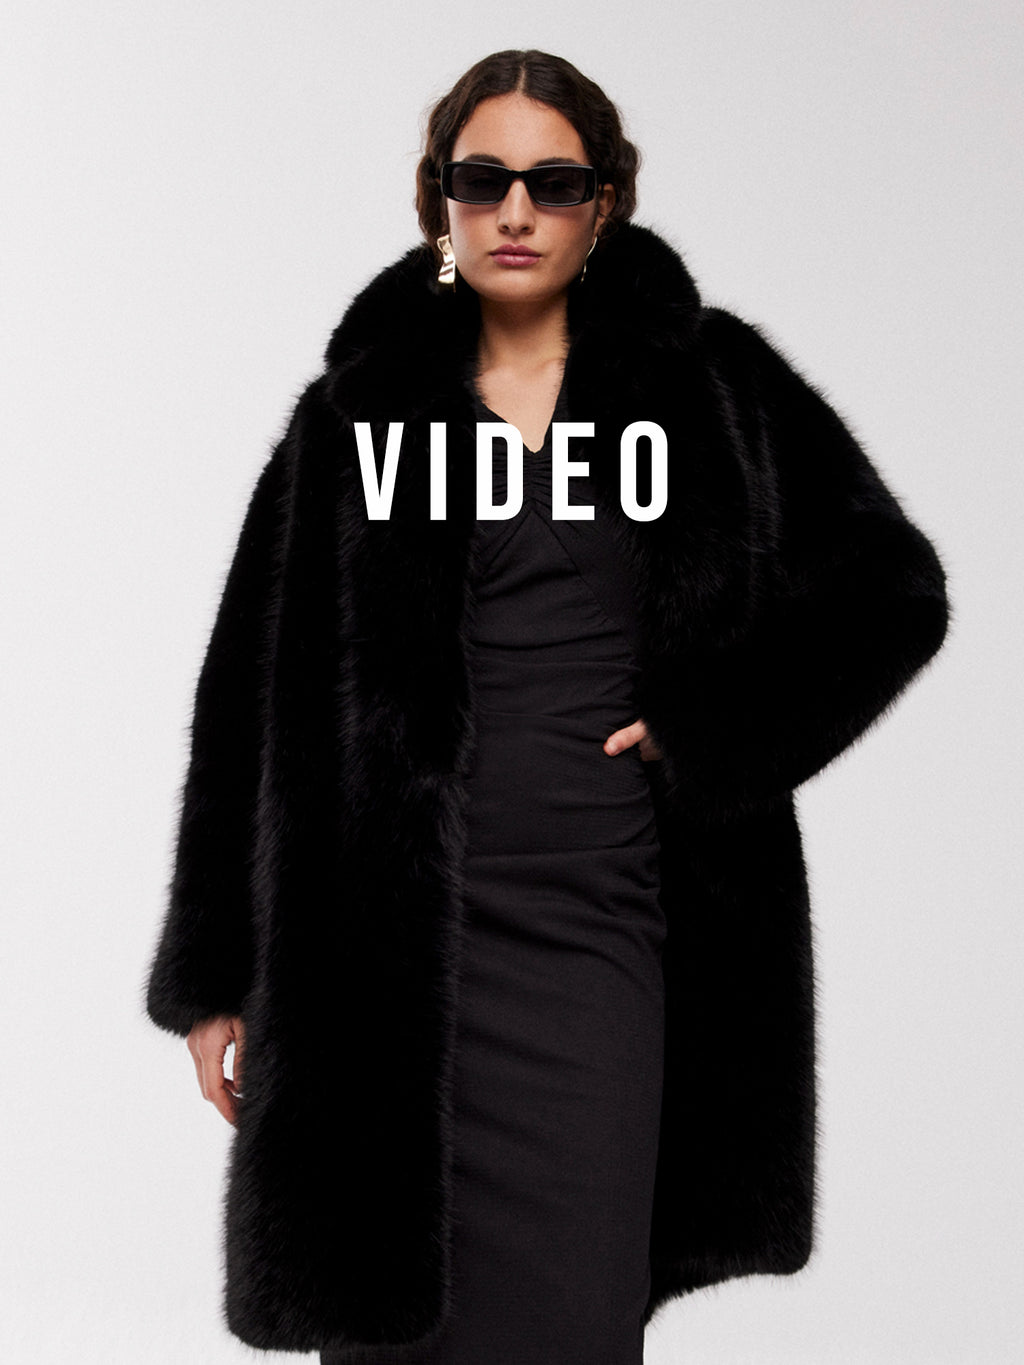 mioh | ACADEMY - Abrigo negro pelo faux fur tendencia street style. Pura tendencia vogue FW23. MIOH marca española moda famosas instagramers